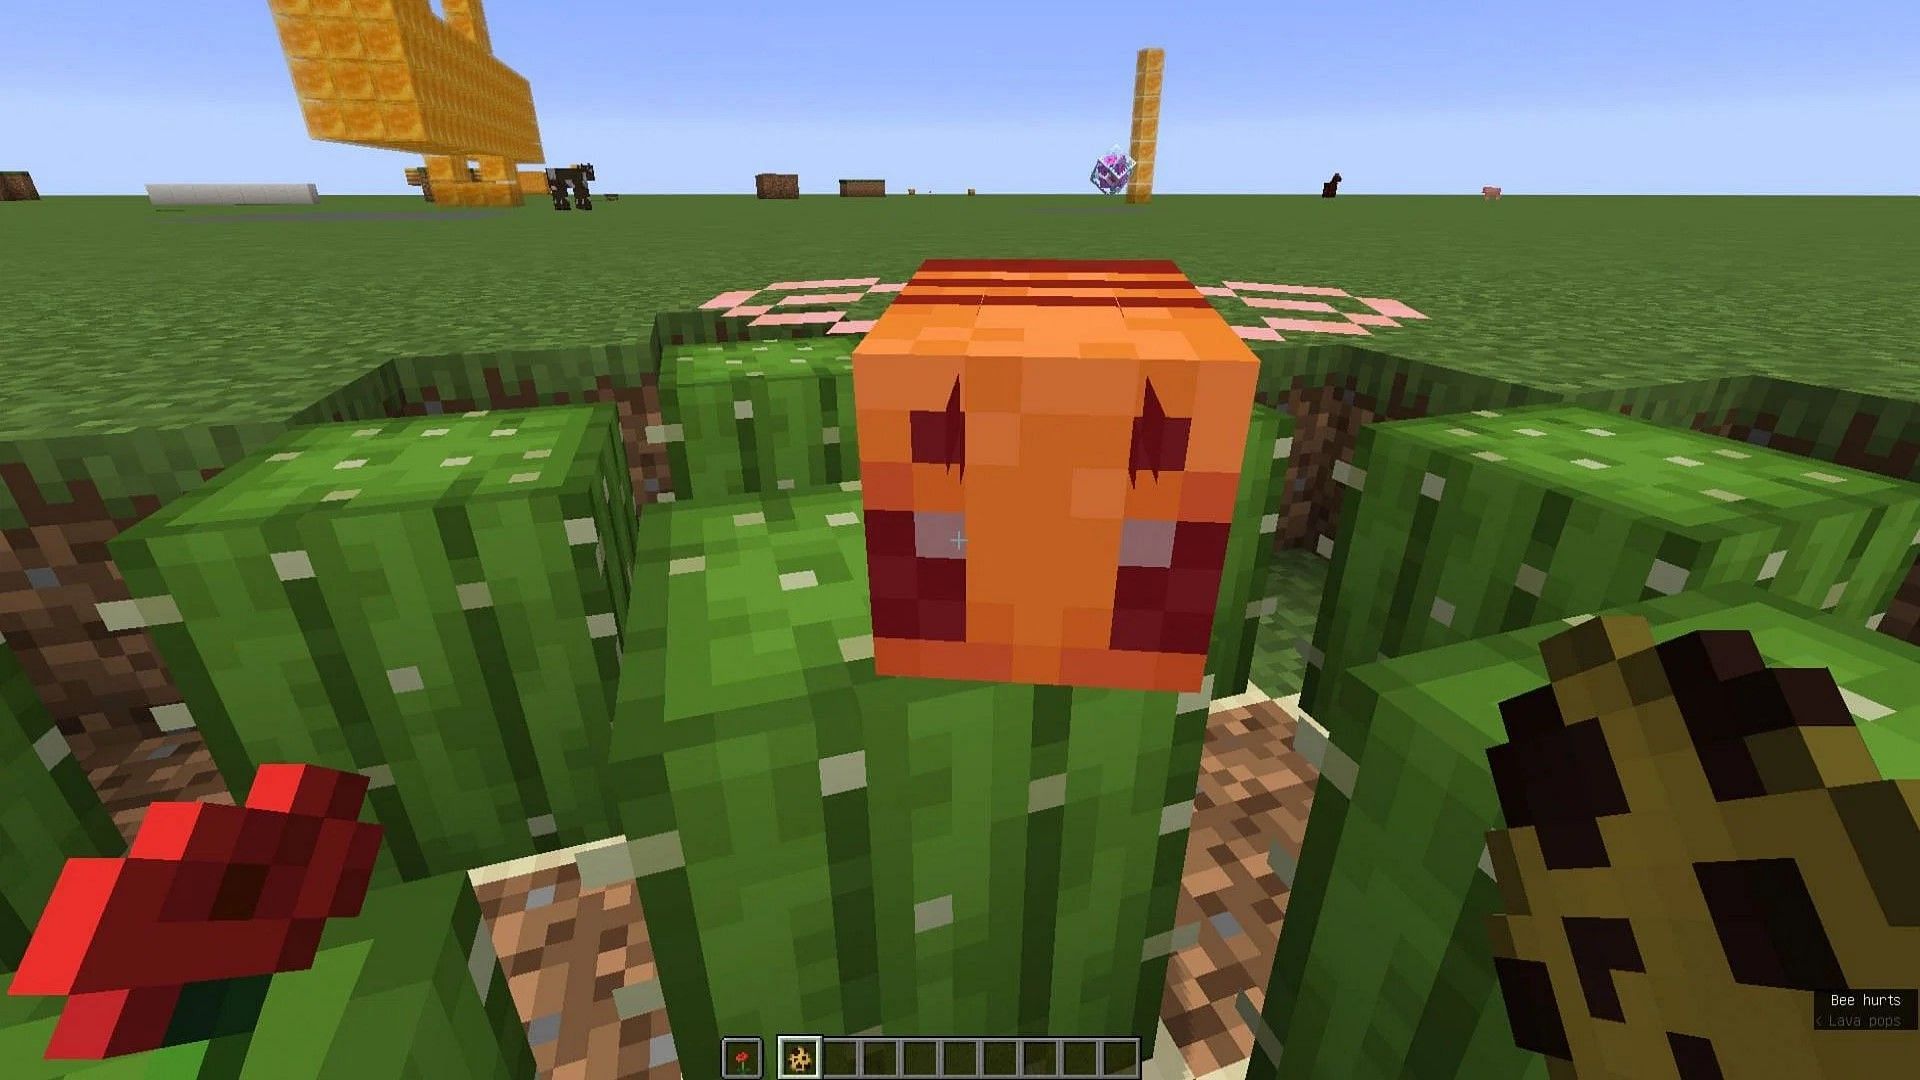 Cacti damaging a bee in Minecraft (Image via Mojang)